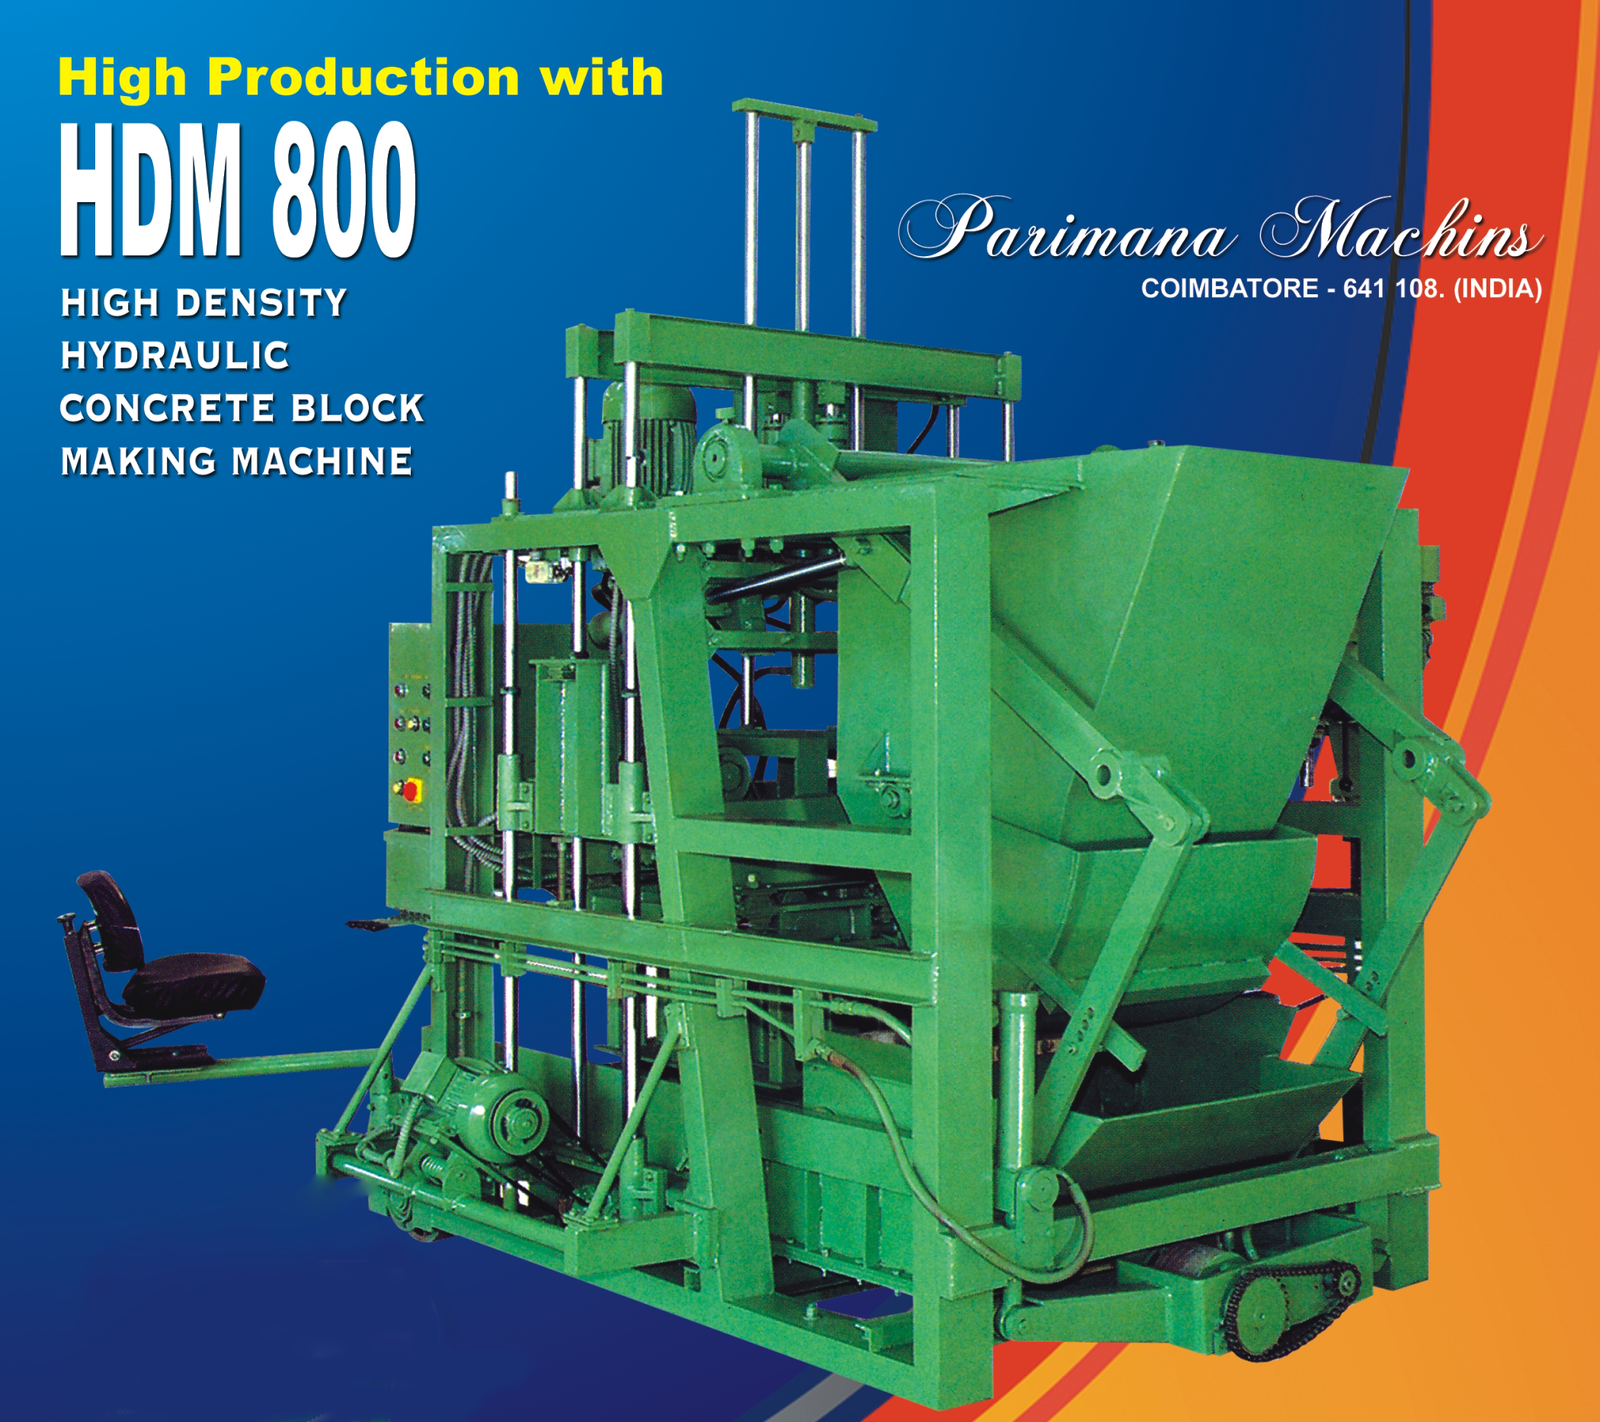 HDM 800 Hydraulic Concrete
Block Making Machine